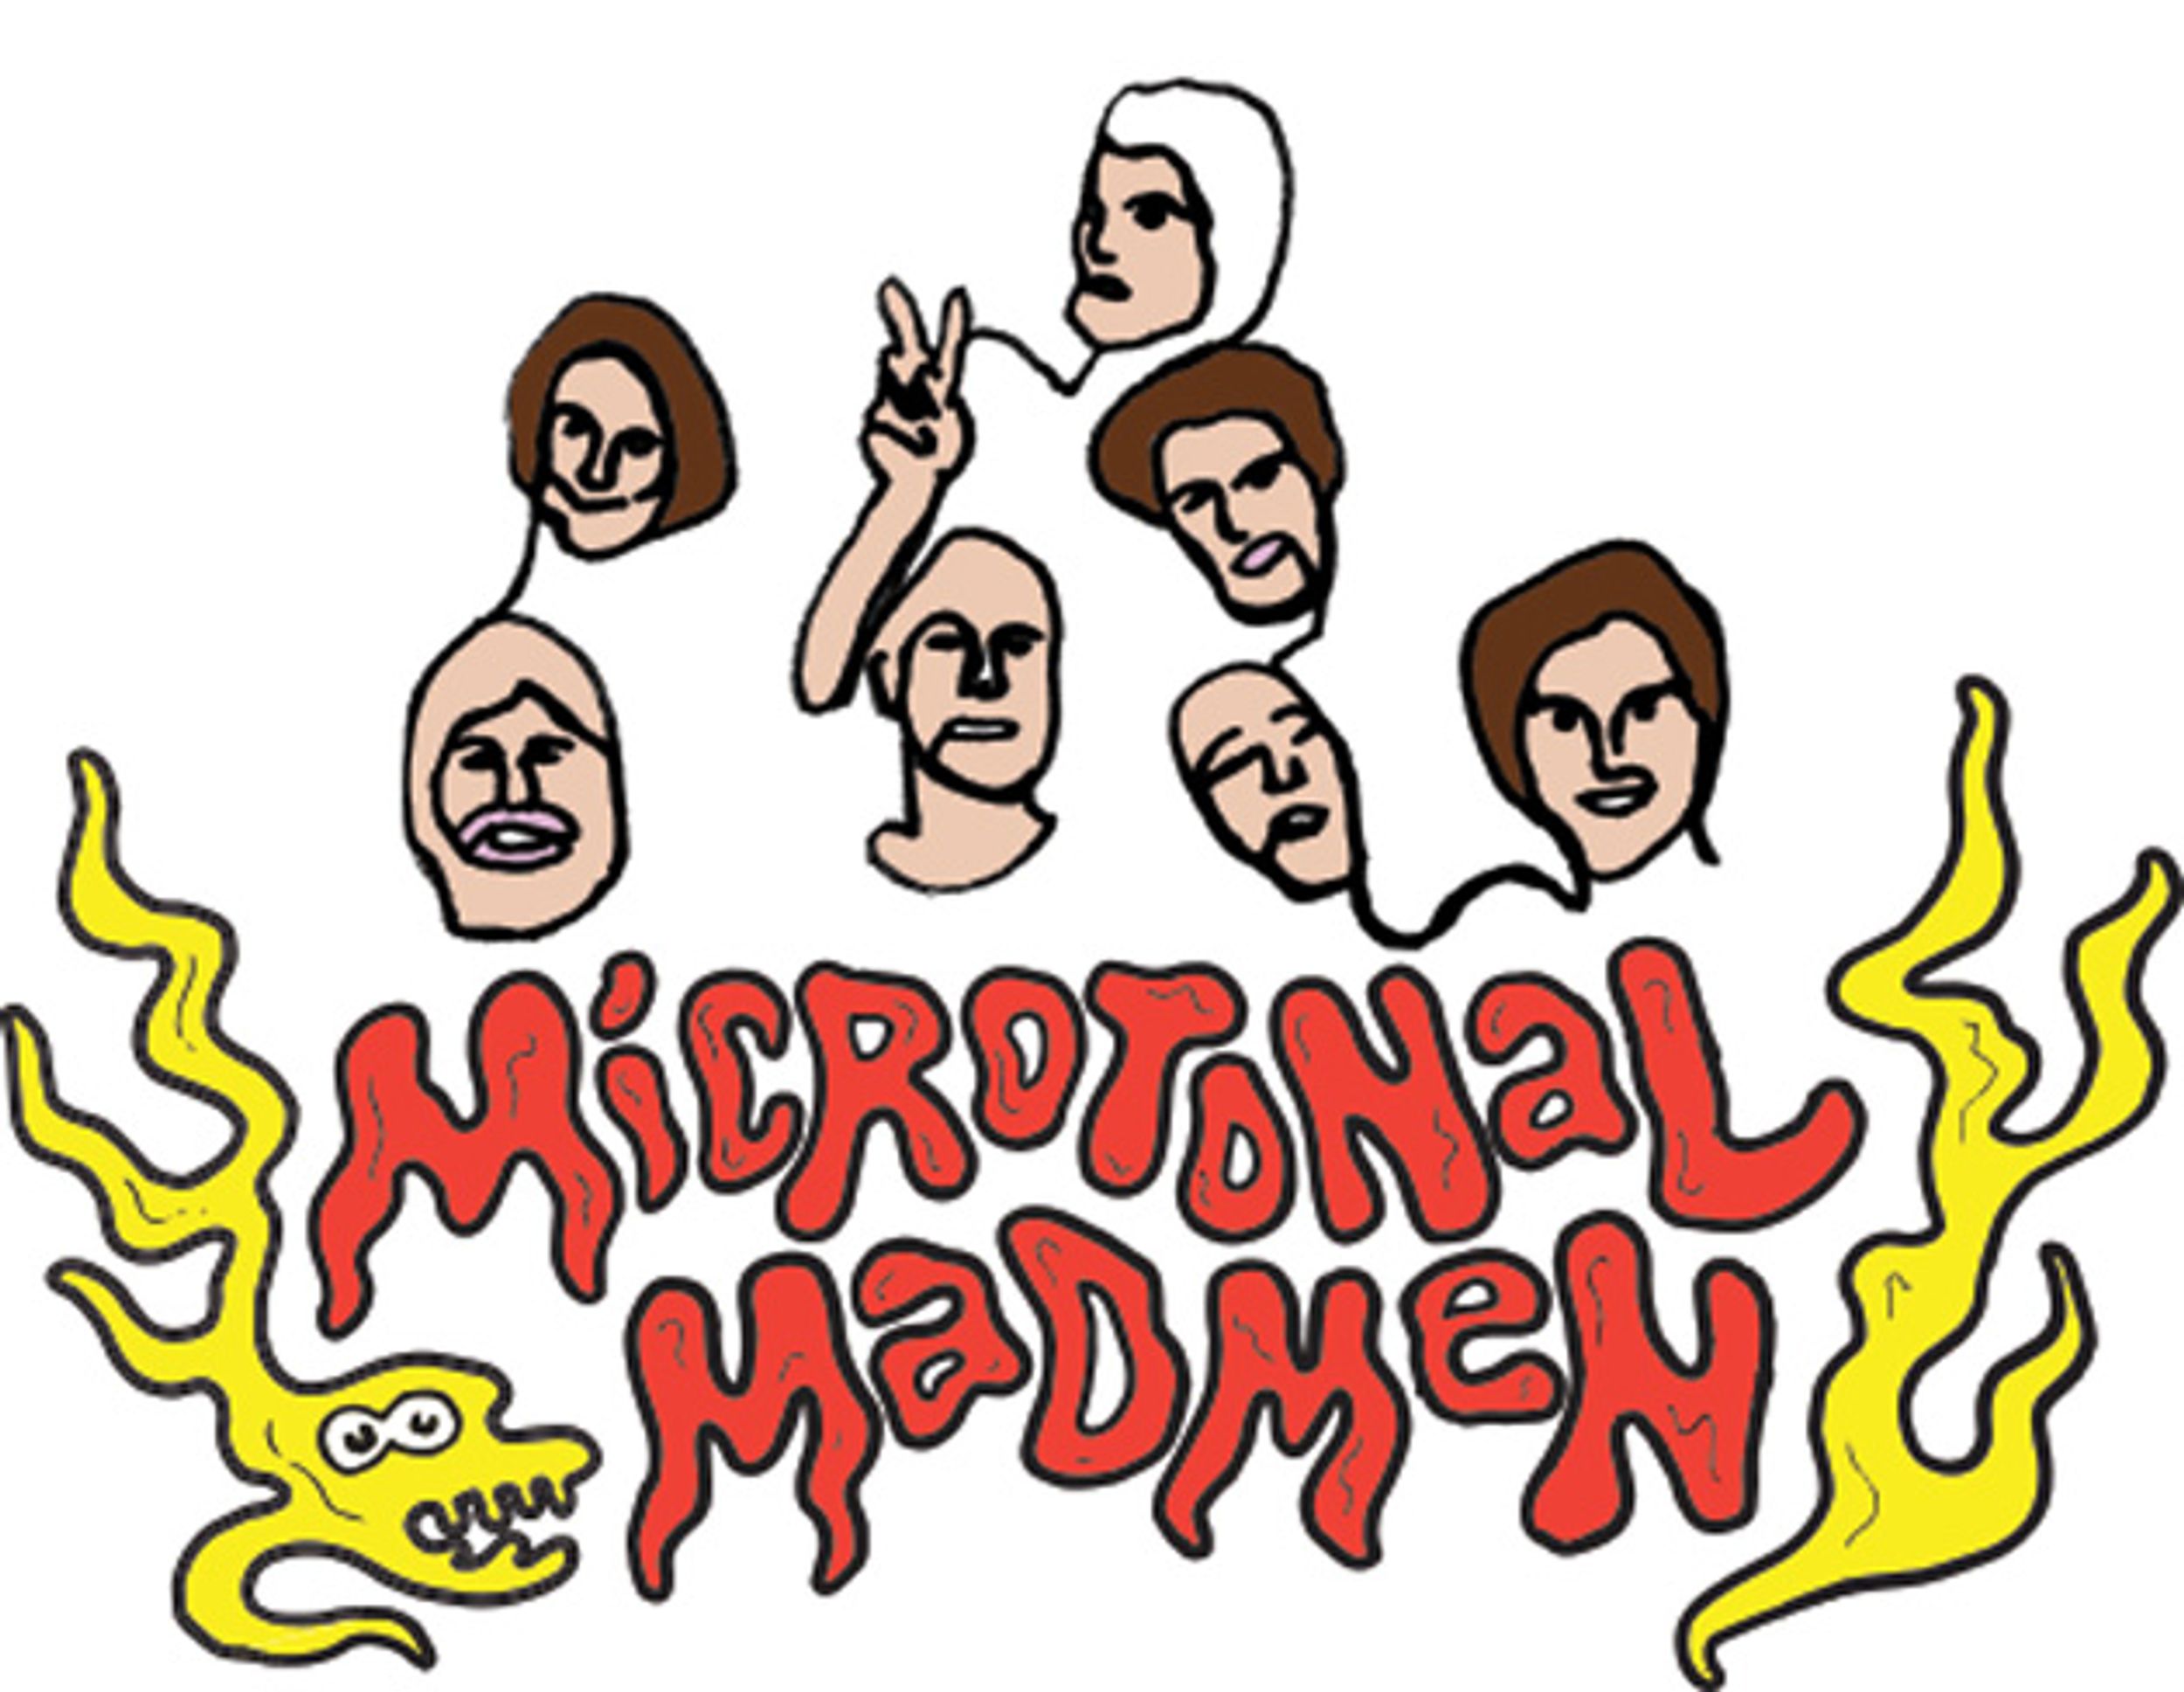 Microtonal Madmen: King Gizzard and the Lizard Wizard’s Stu Mackenzie and Joey Walker